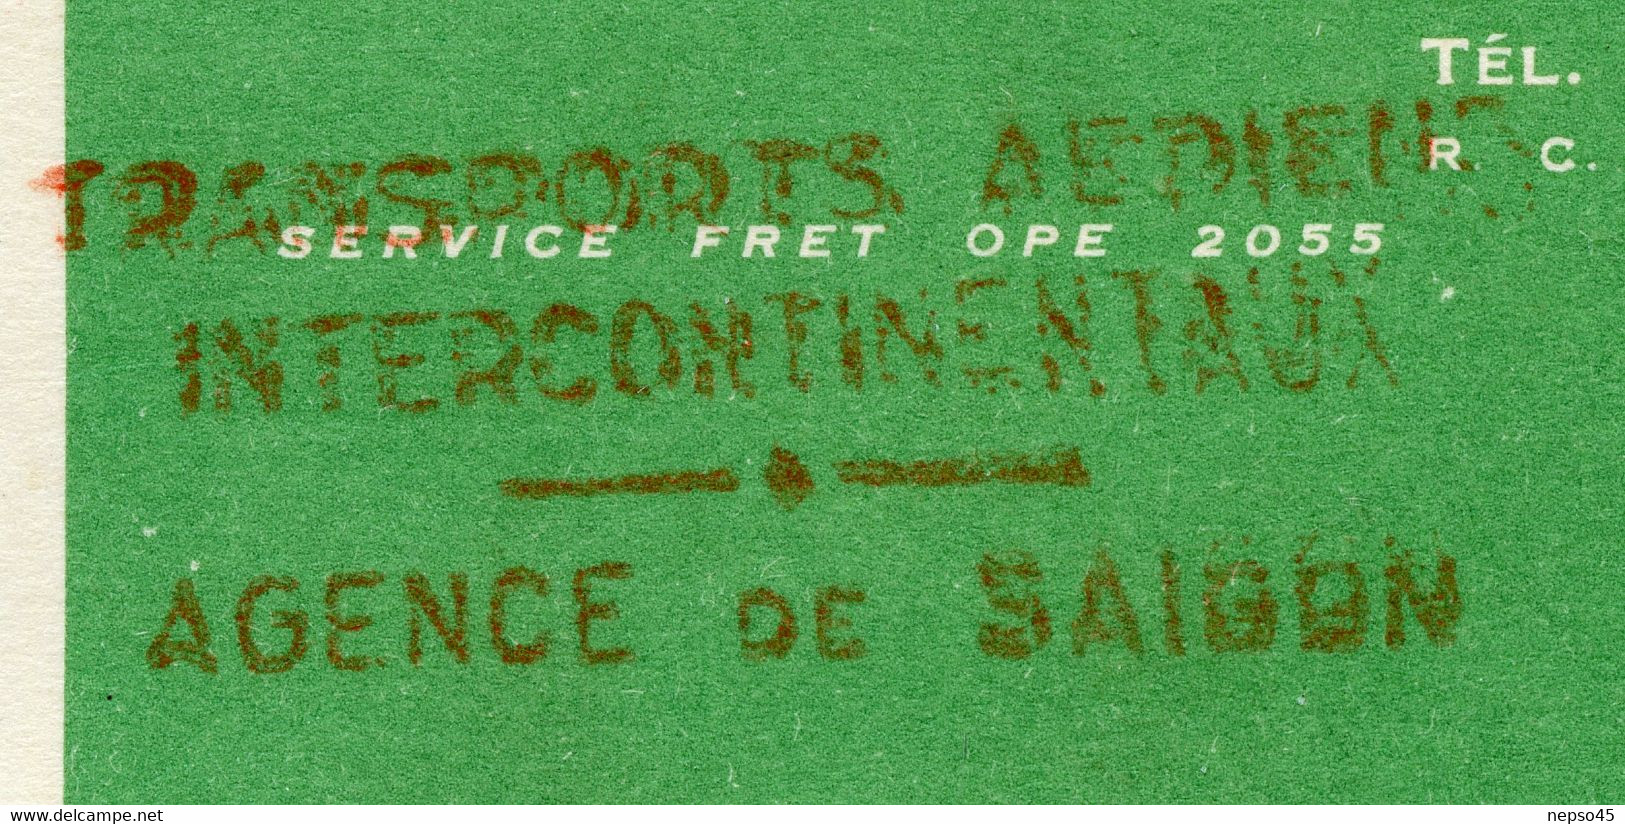 Billet D'embarquement D'avion Transport De Saïgon Vers Paris 24 Novembre 1953.( Période Guerre D'Indochine) - World